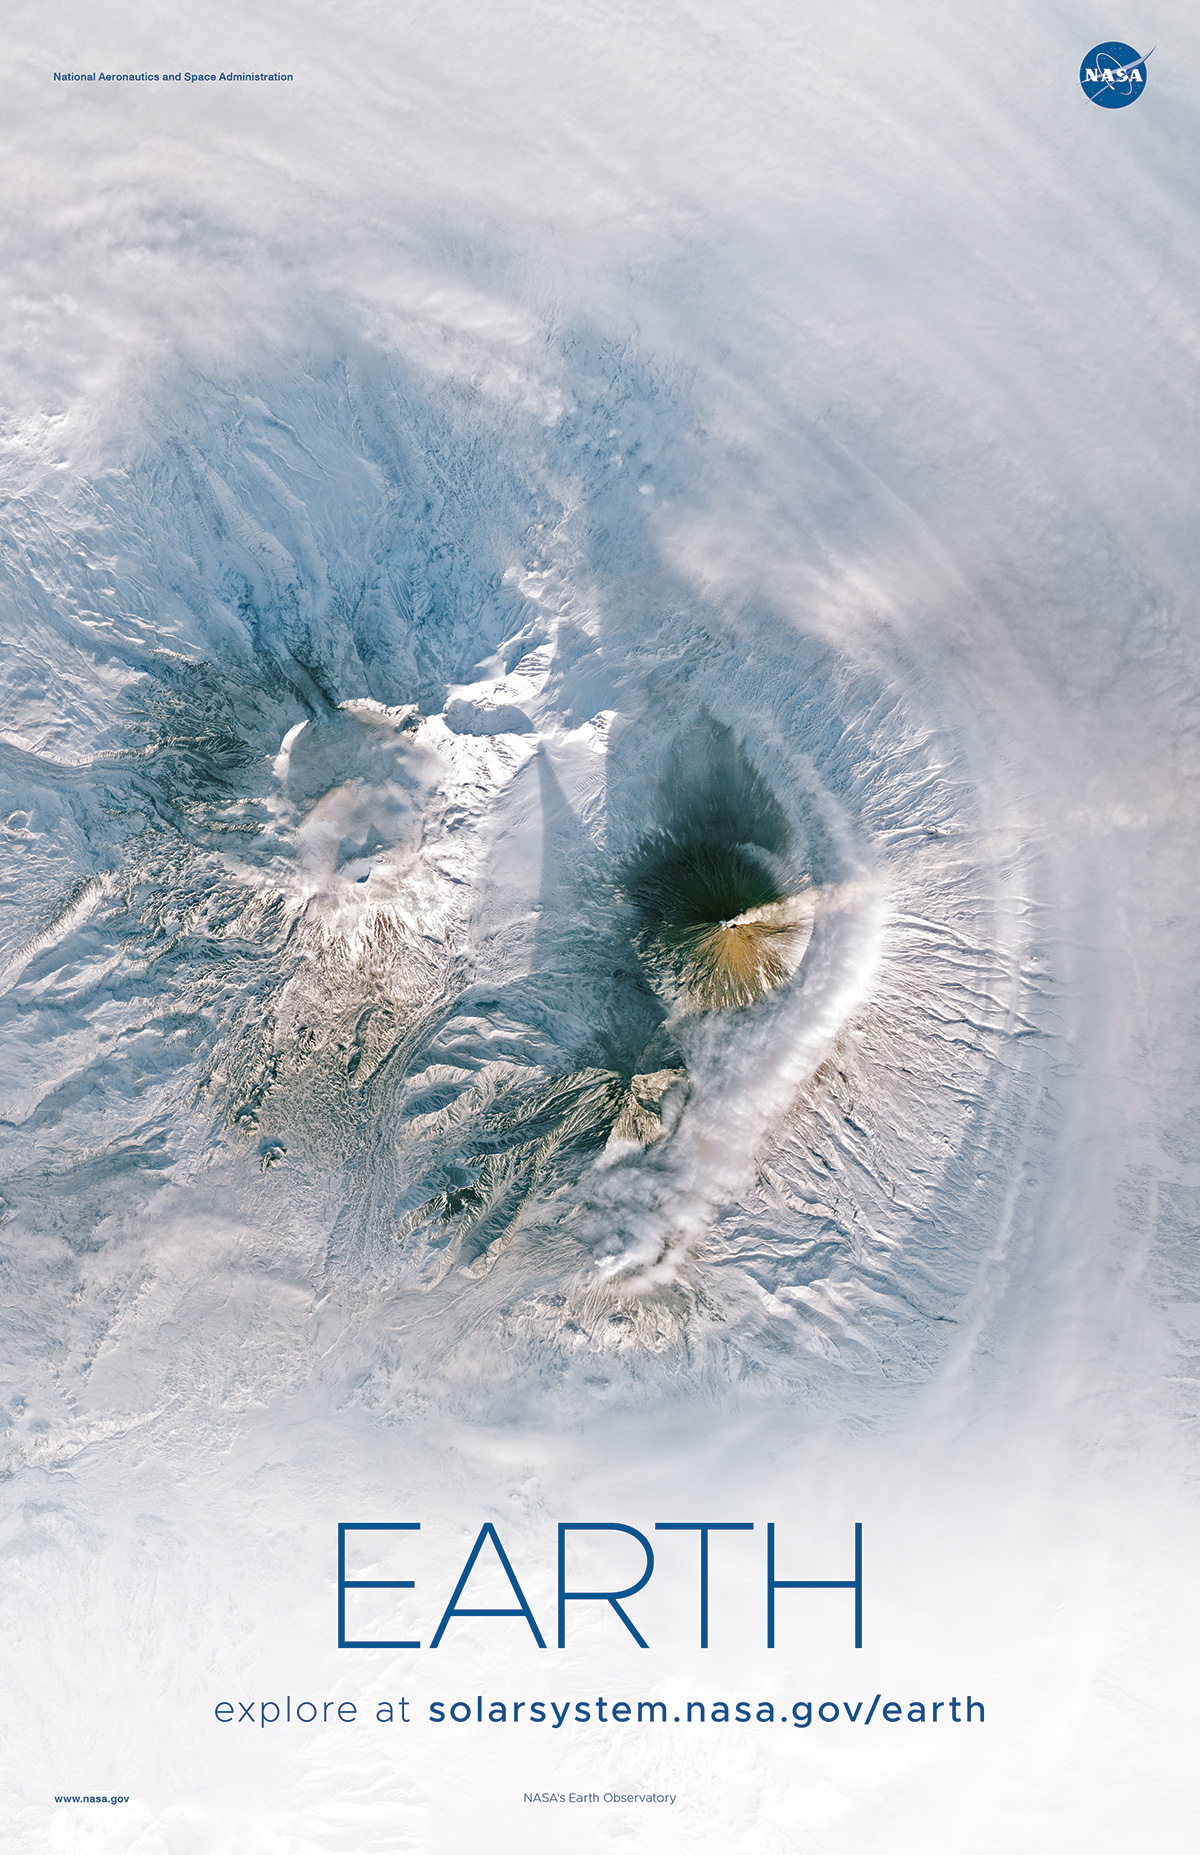 Orbital view of smoking volcano amid snowcapped peaks.